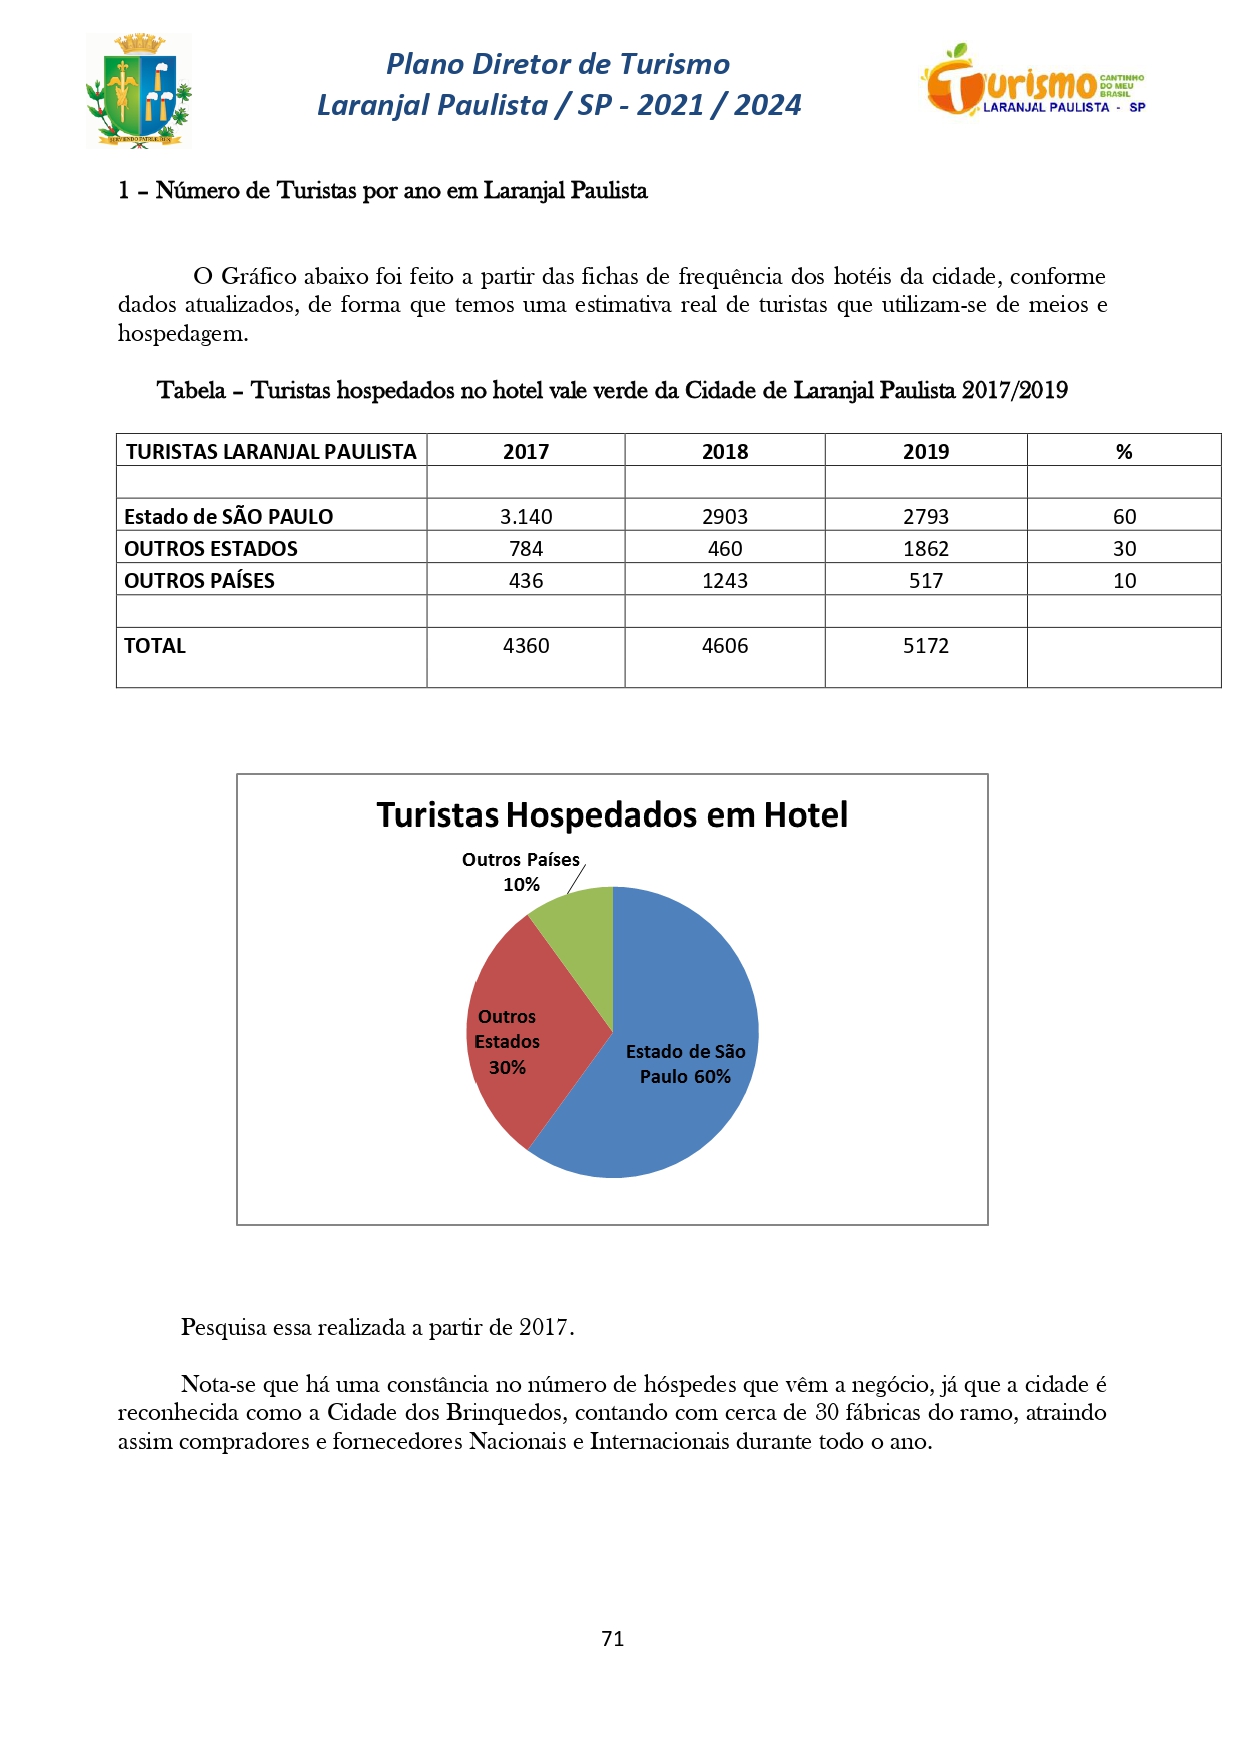 Plano Diretor de Turismo Laranjal Paulista - SP - 2021/2024